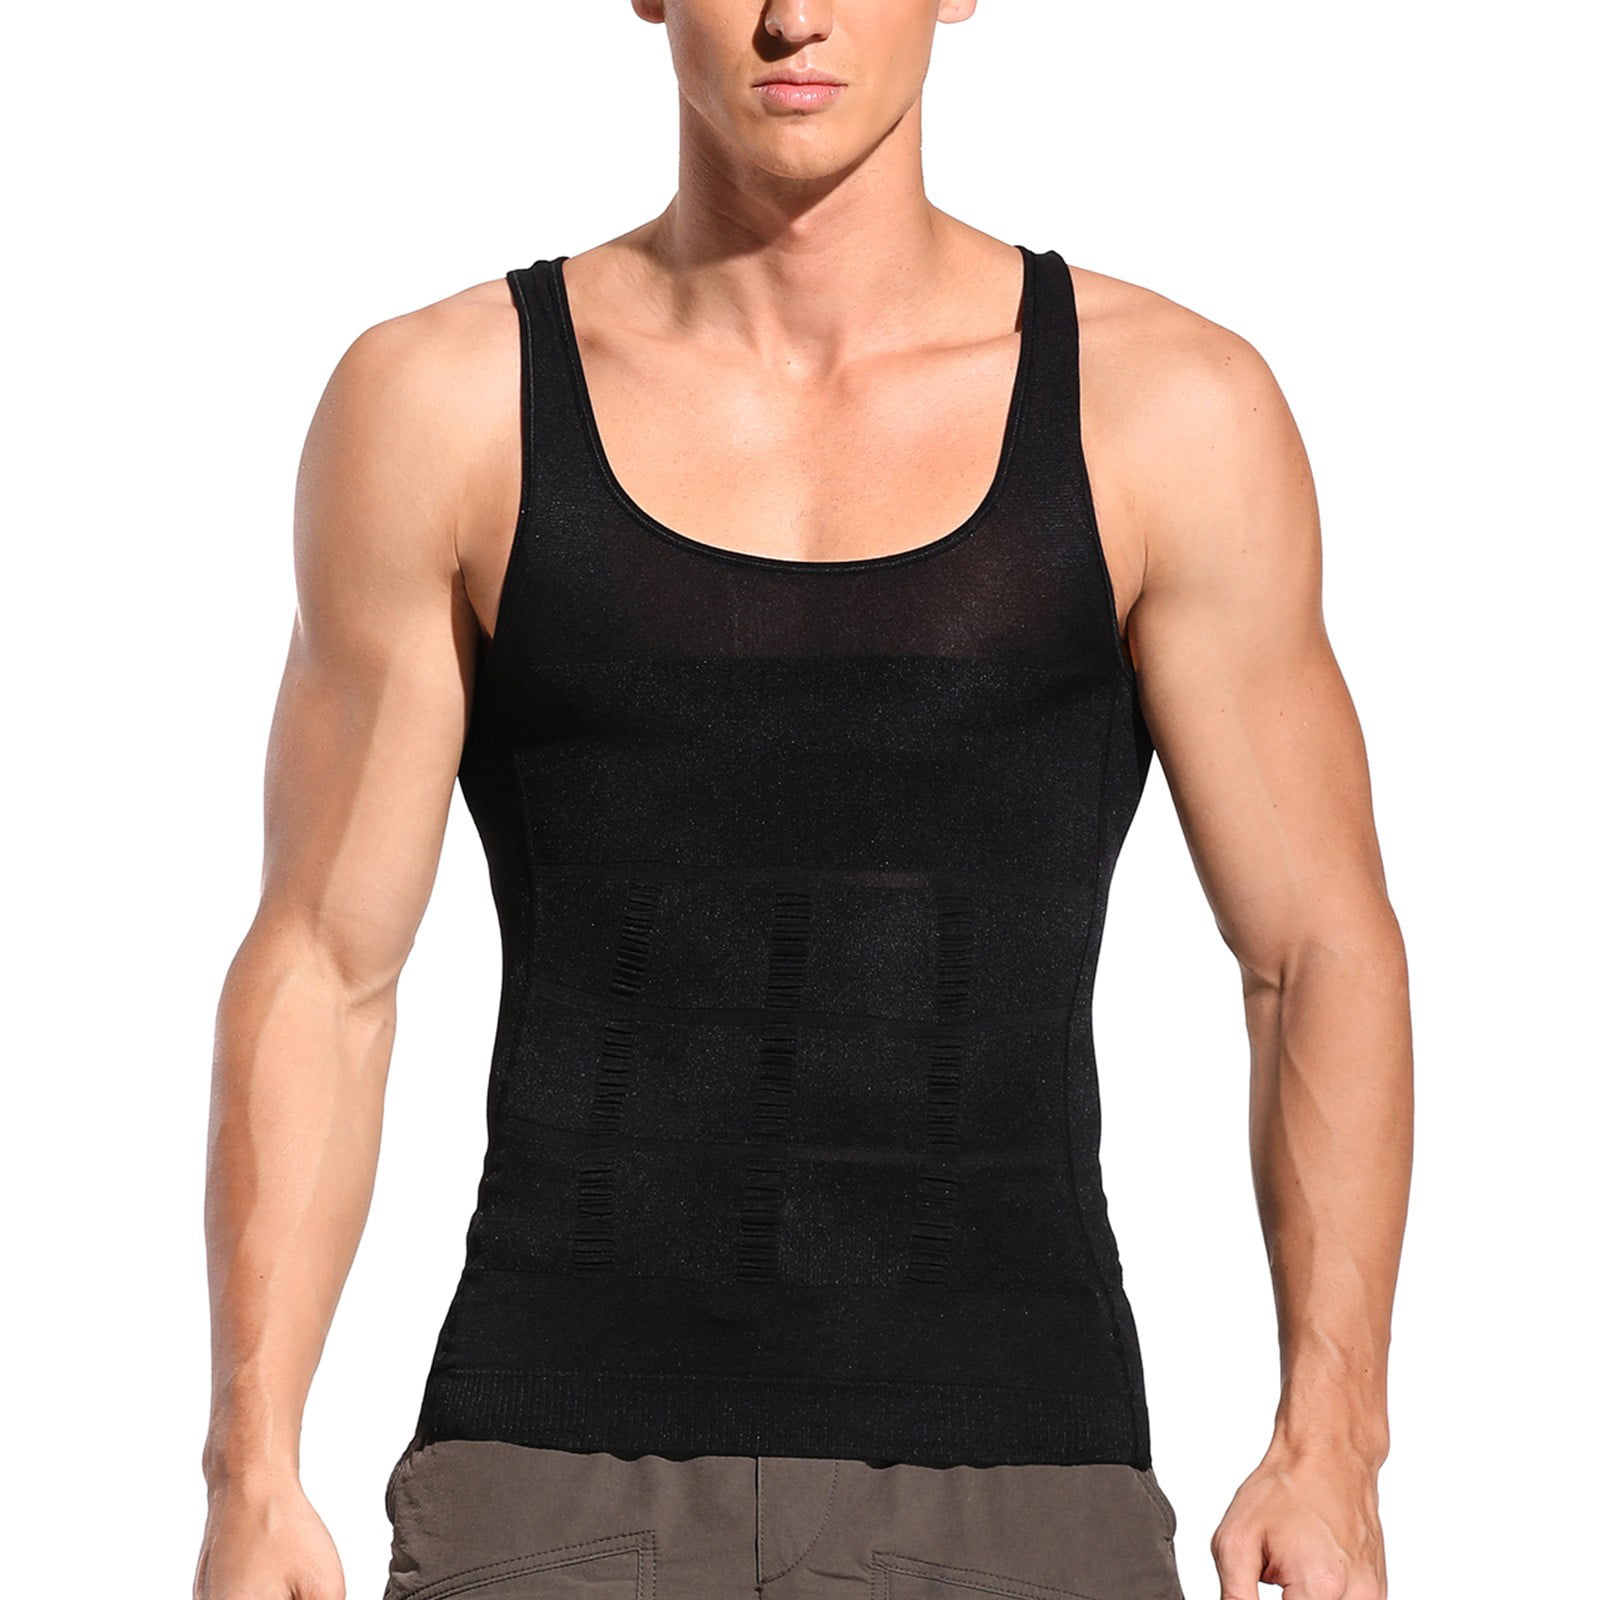 UK Men's Slimming Body Shaper Gynecomastia Vest Undershirt Tank Top Compression